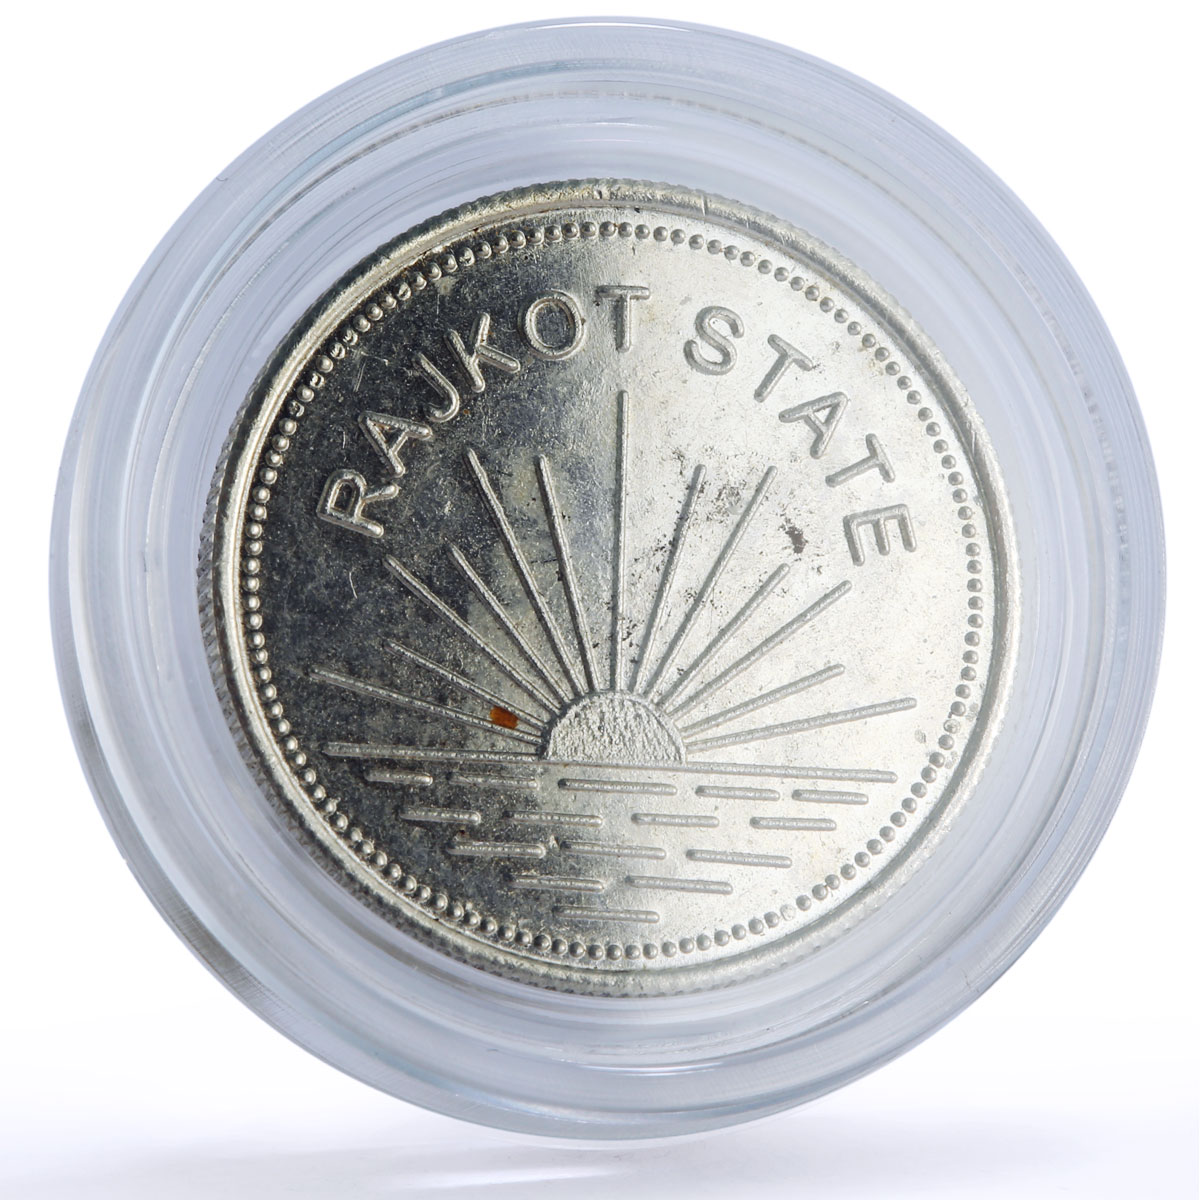 India Rajkot 1 mohur Dharmendra Singhji Restrike Deer Sun X#1a silver coin 1945